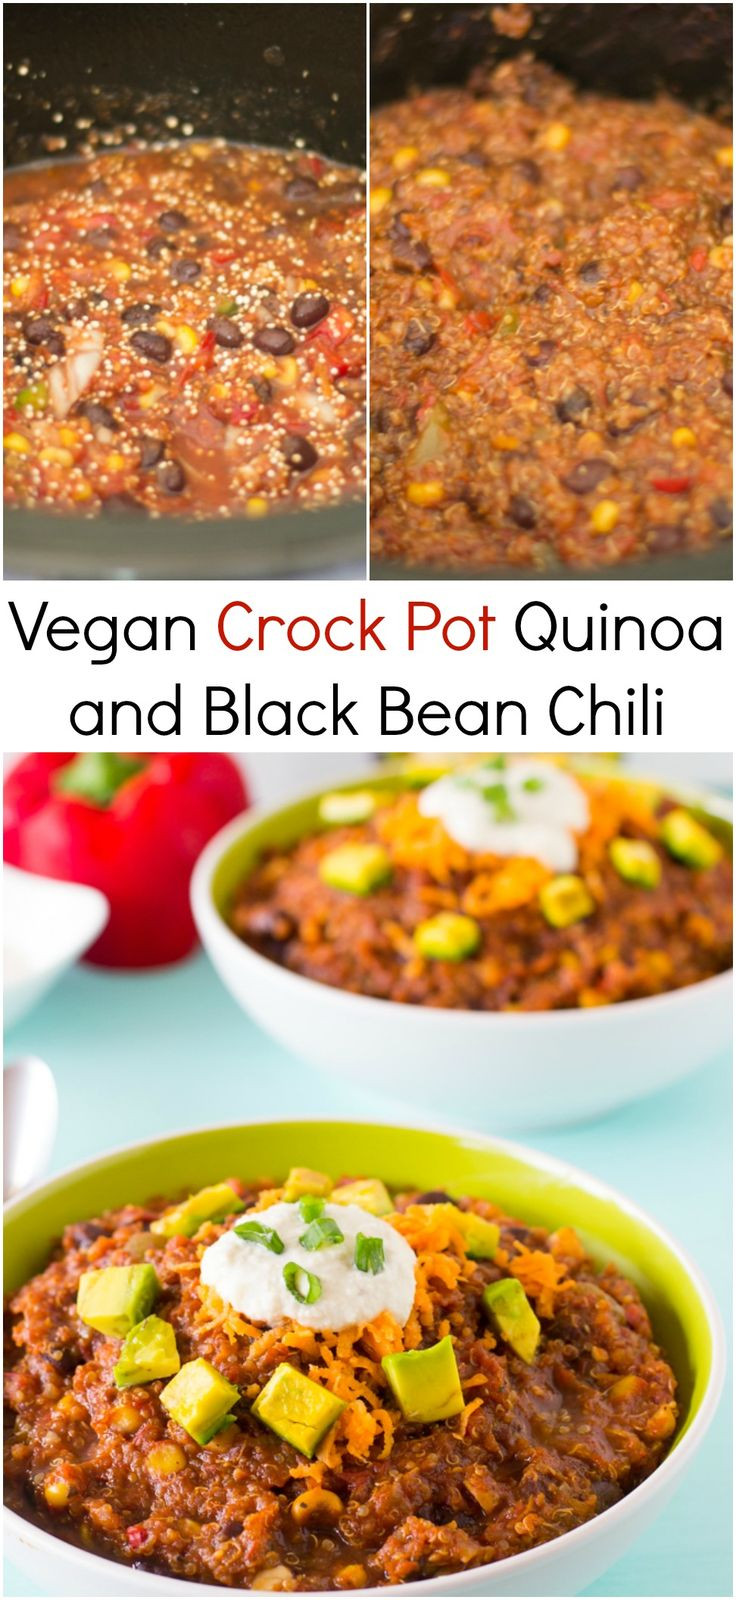 Vegetarian Crock Pot Recipes Healthy
 17 Best images about Vegan Crockpot Recipes on Pinterest